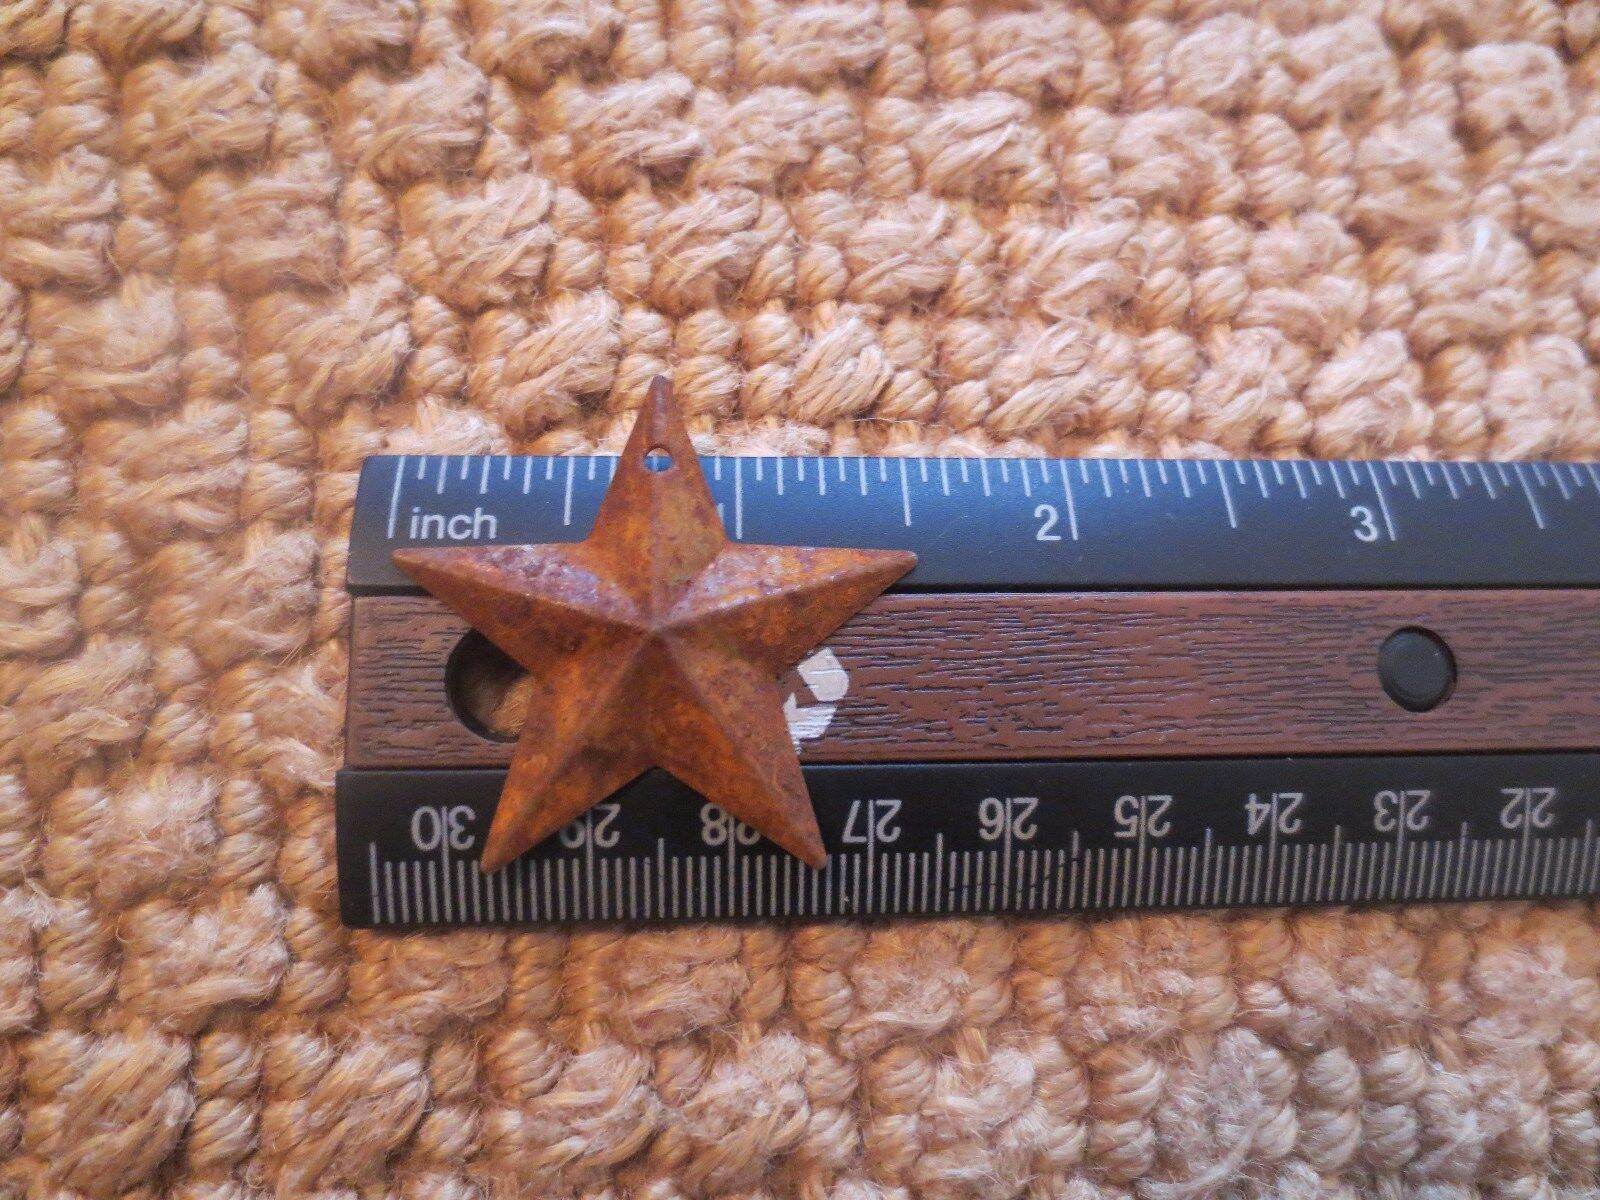 Lot of 100 Rusty Barn Stars 1.5 inch Rustic Primitive Country Rusted Dimensional Без бренда - фотография #6